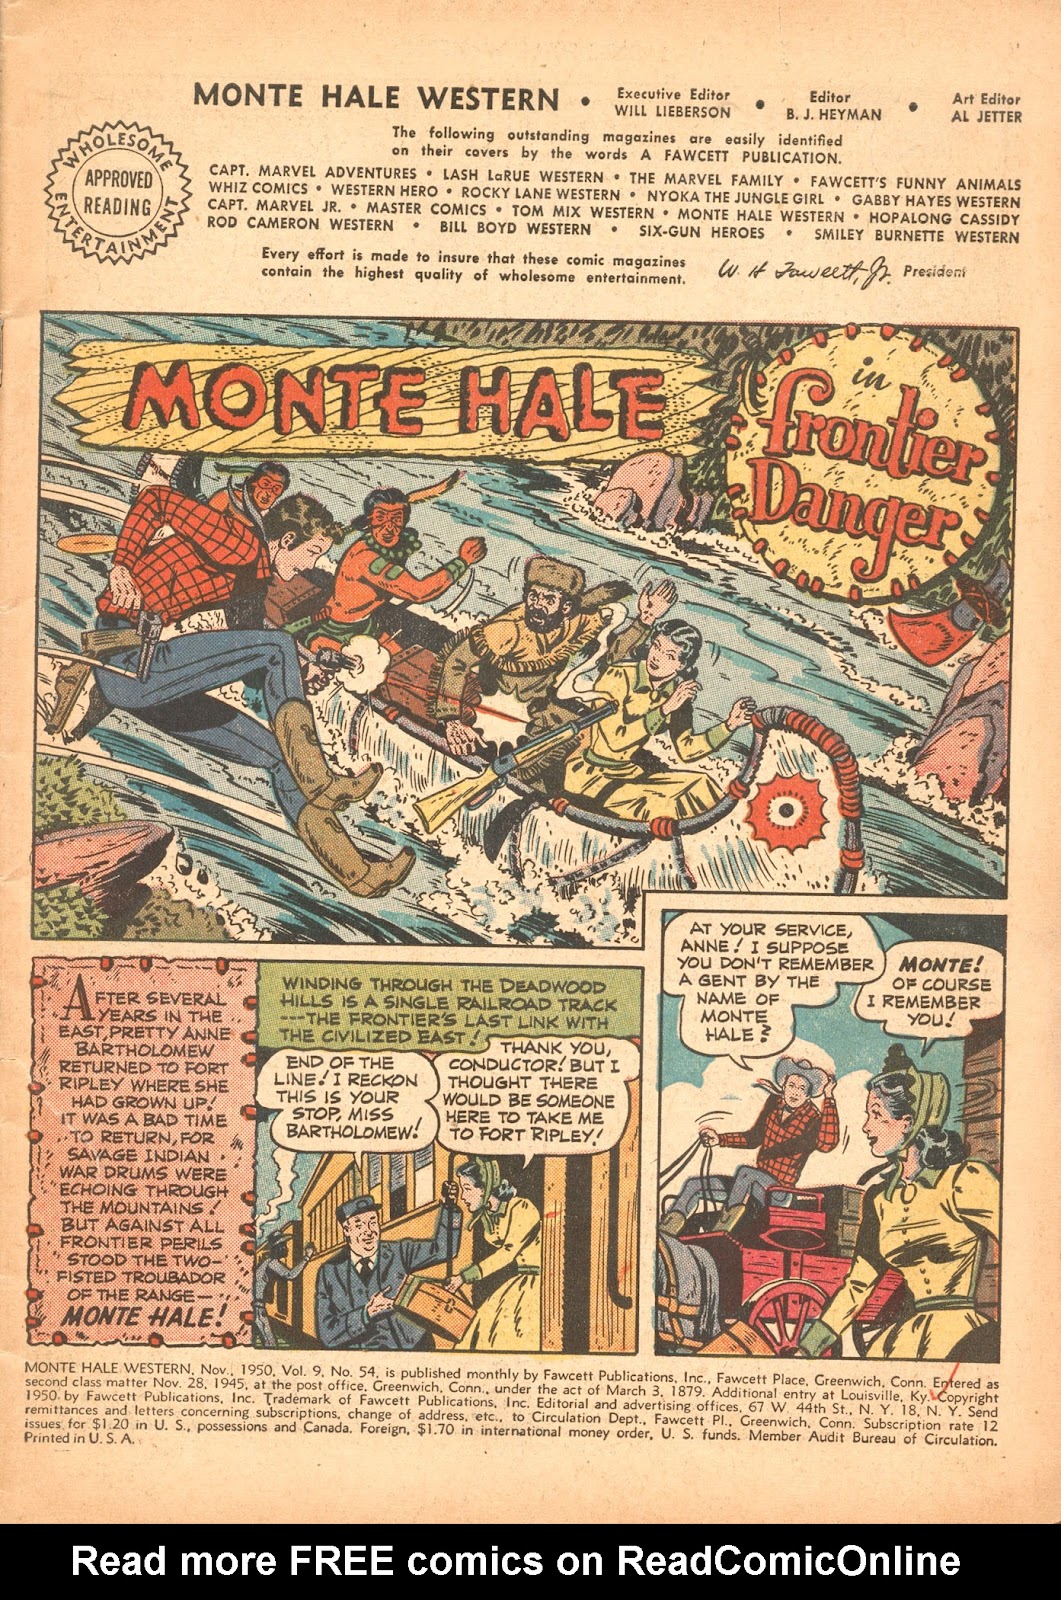 Monte Hale Western issue 54 - Page 3